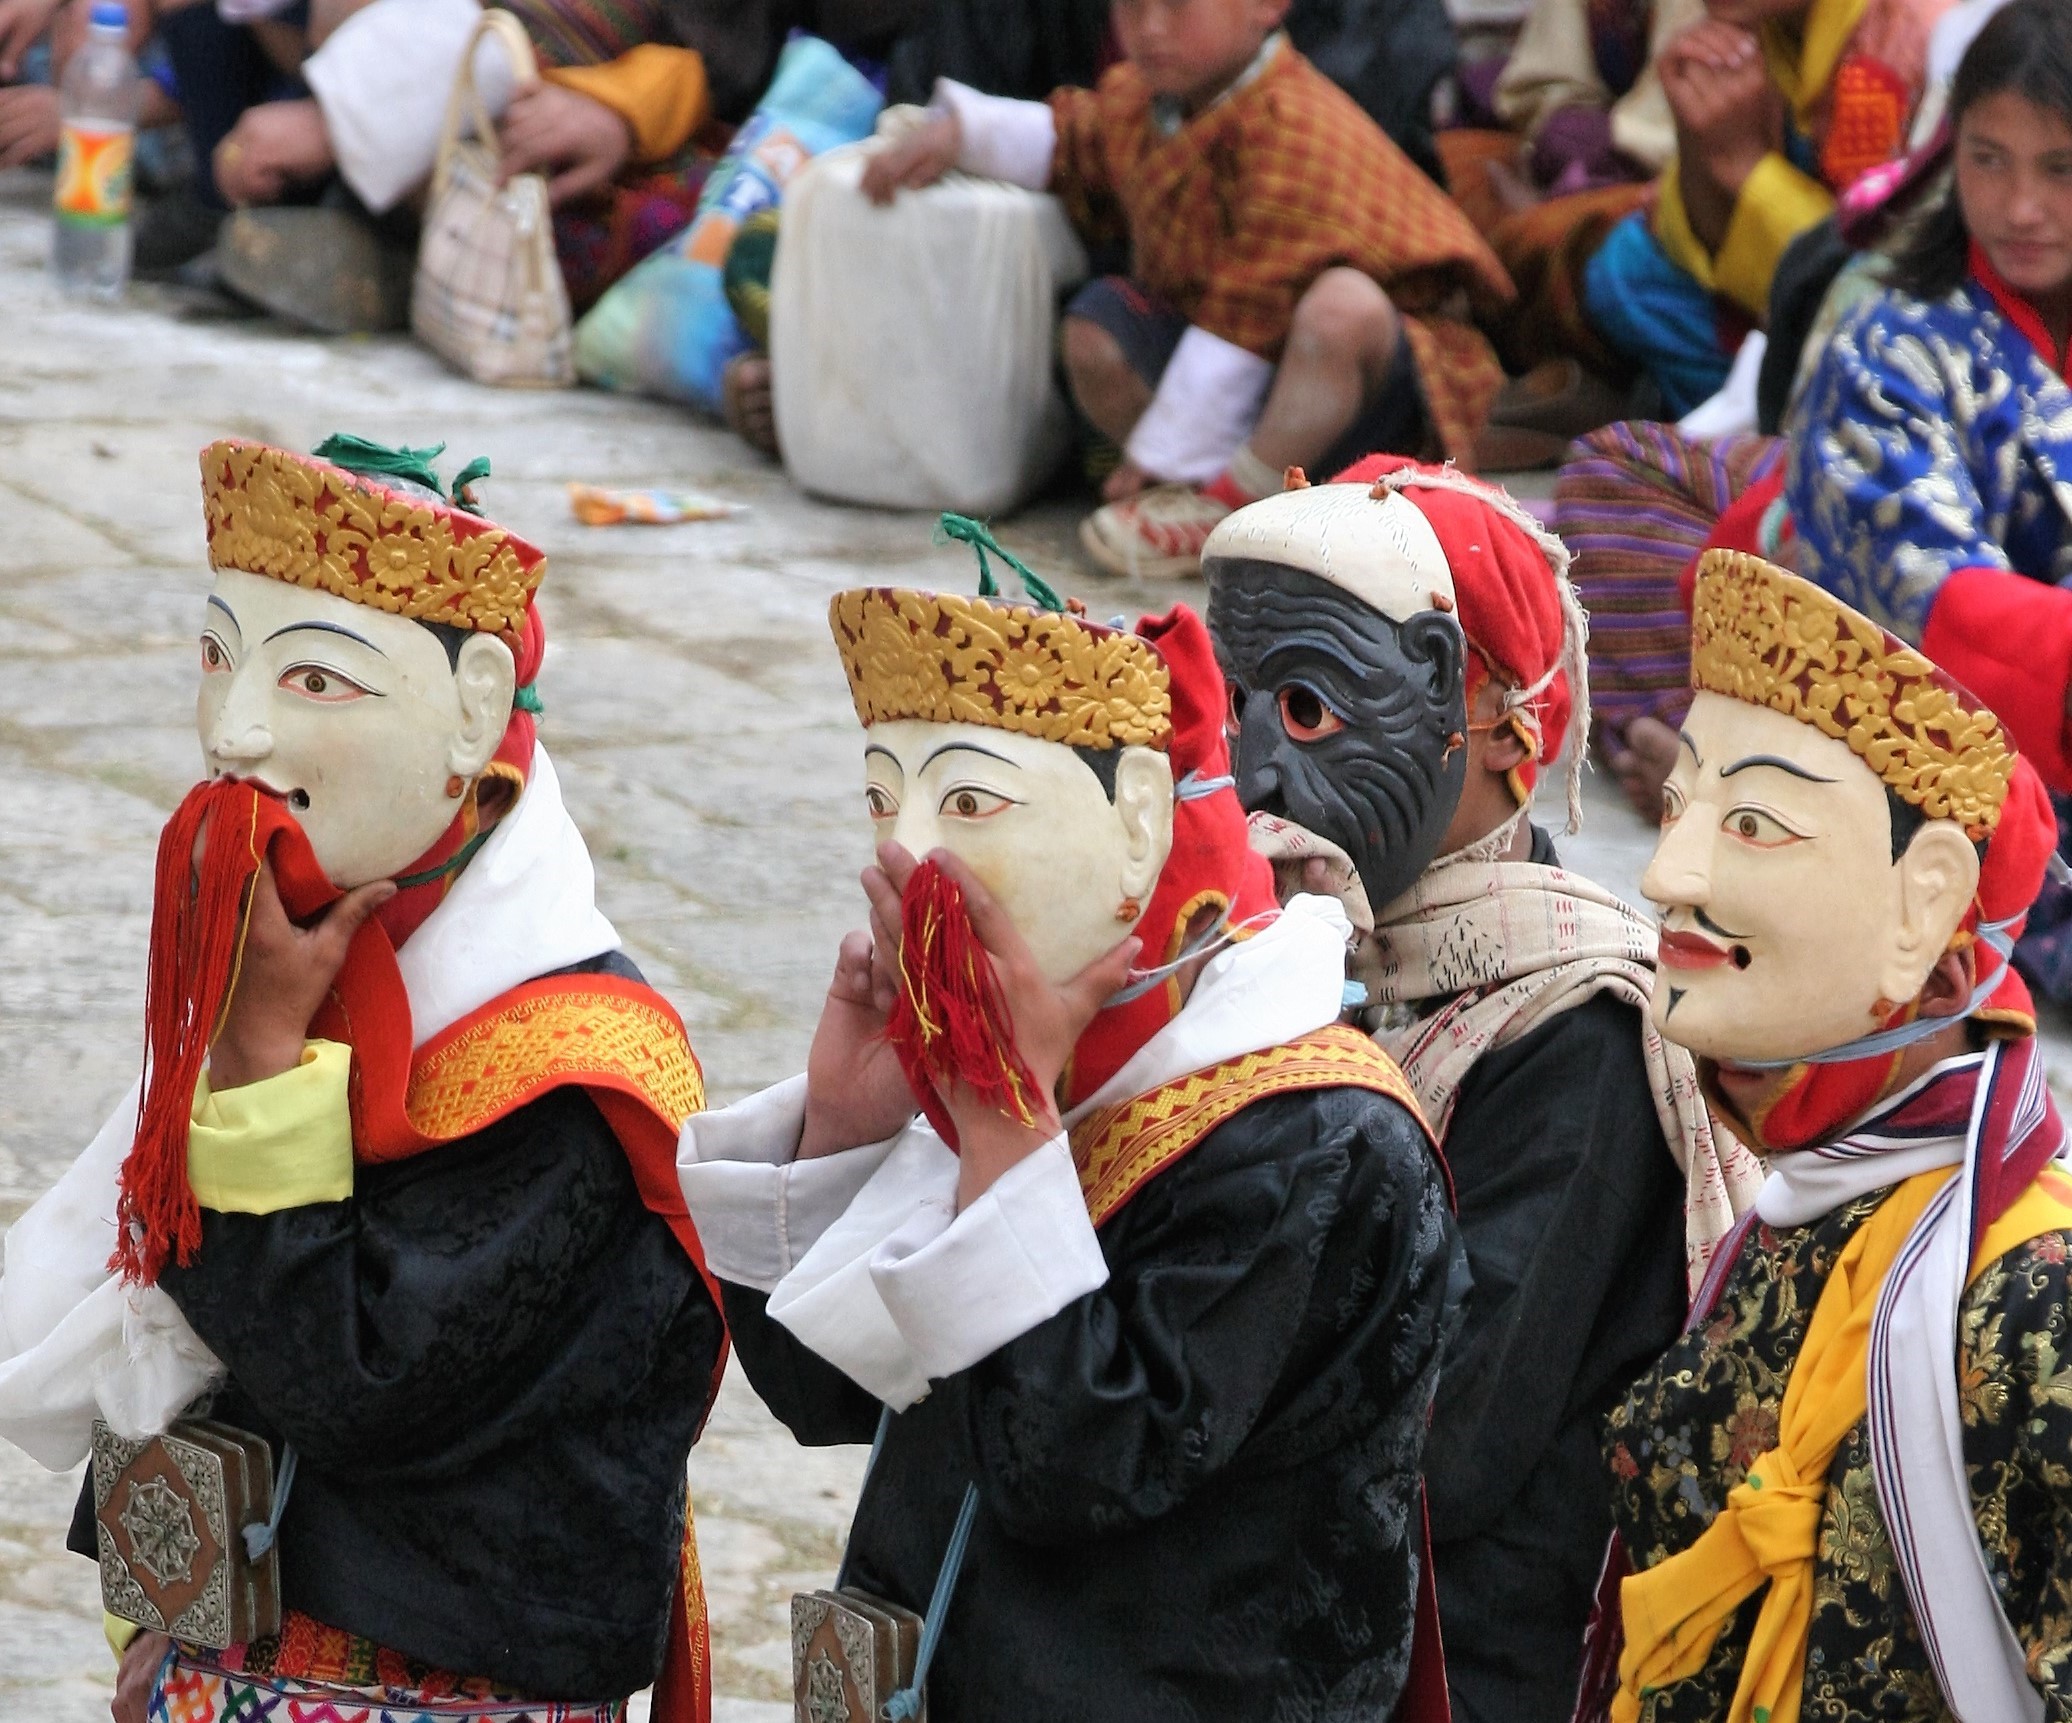 Pholey Moley dance | Bhutan Visit